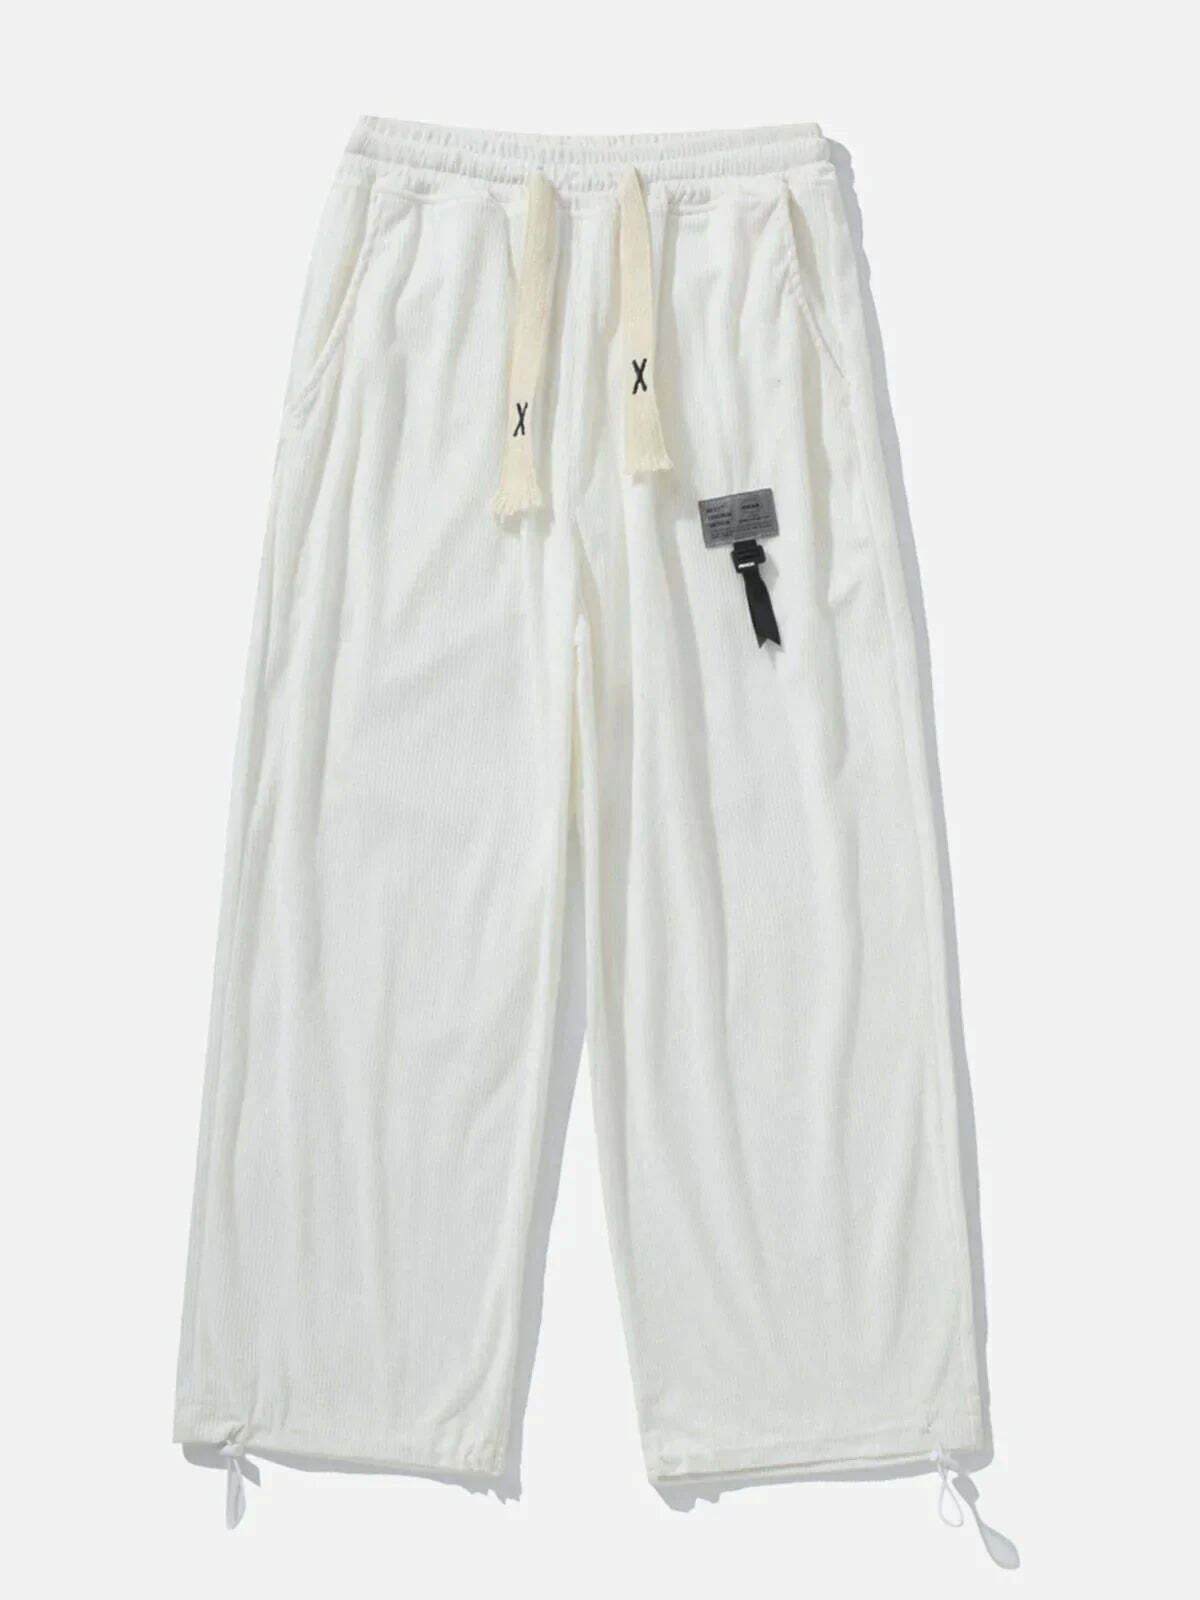 custom labeled drawstring pants youthful & trendy streetwear 7946